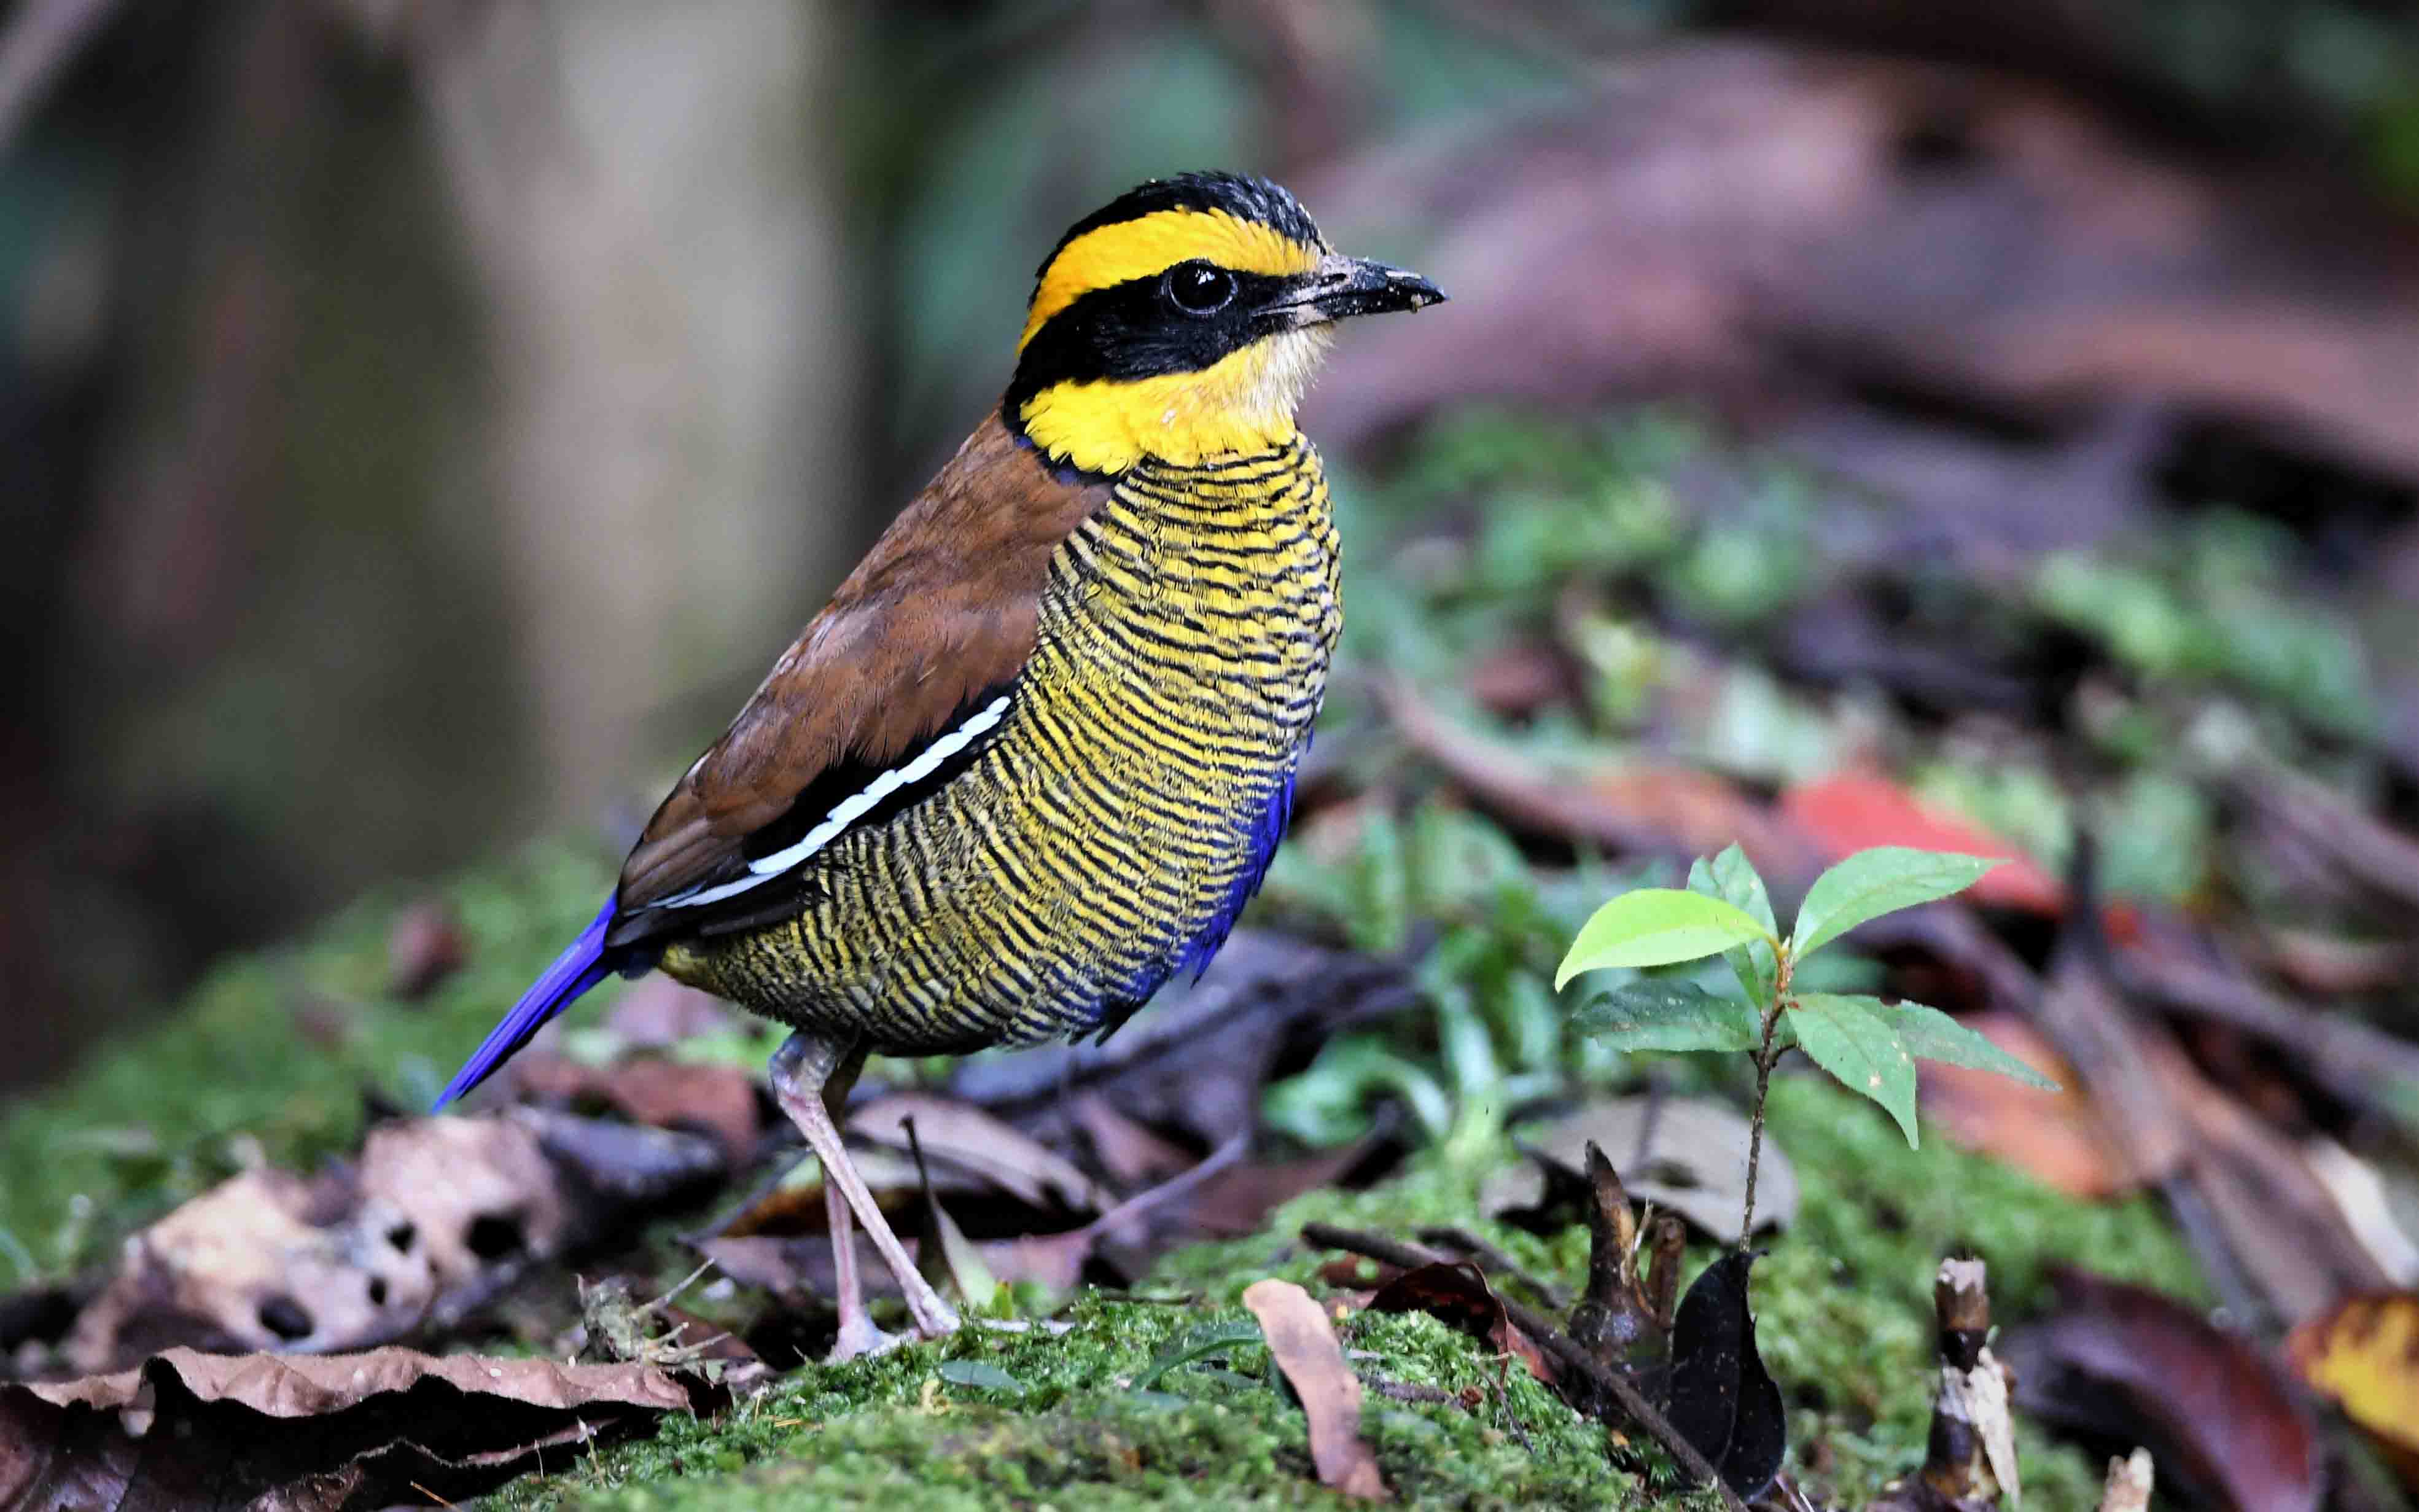 Borneo birding tours